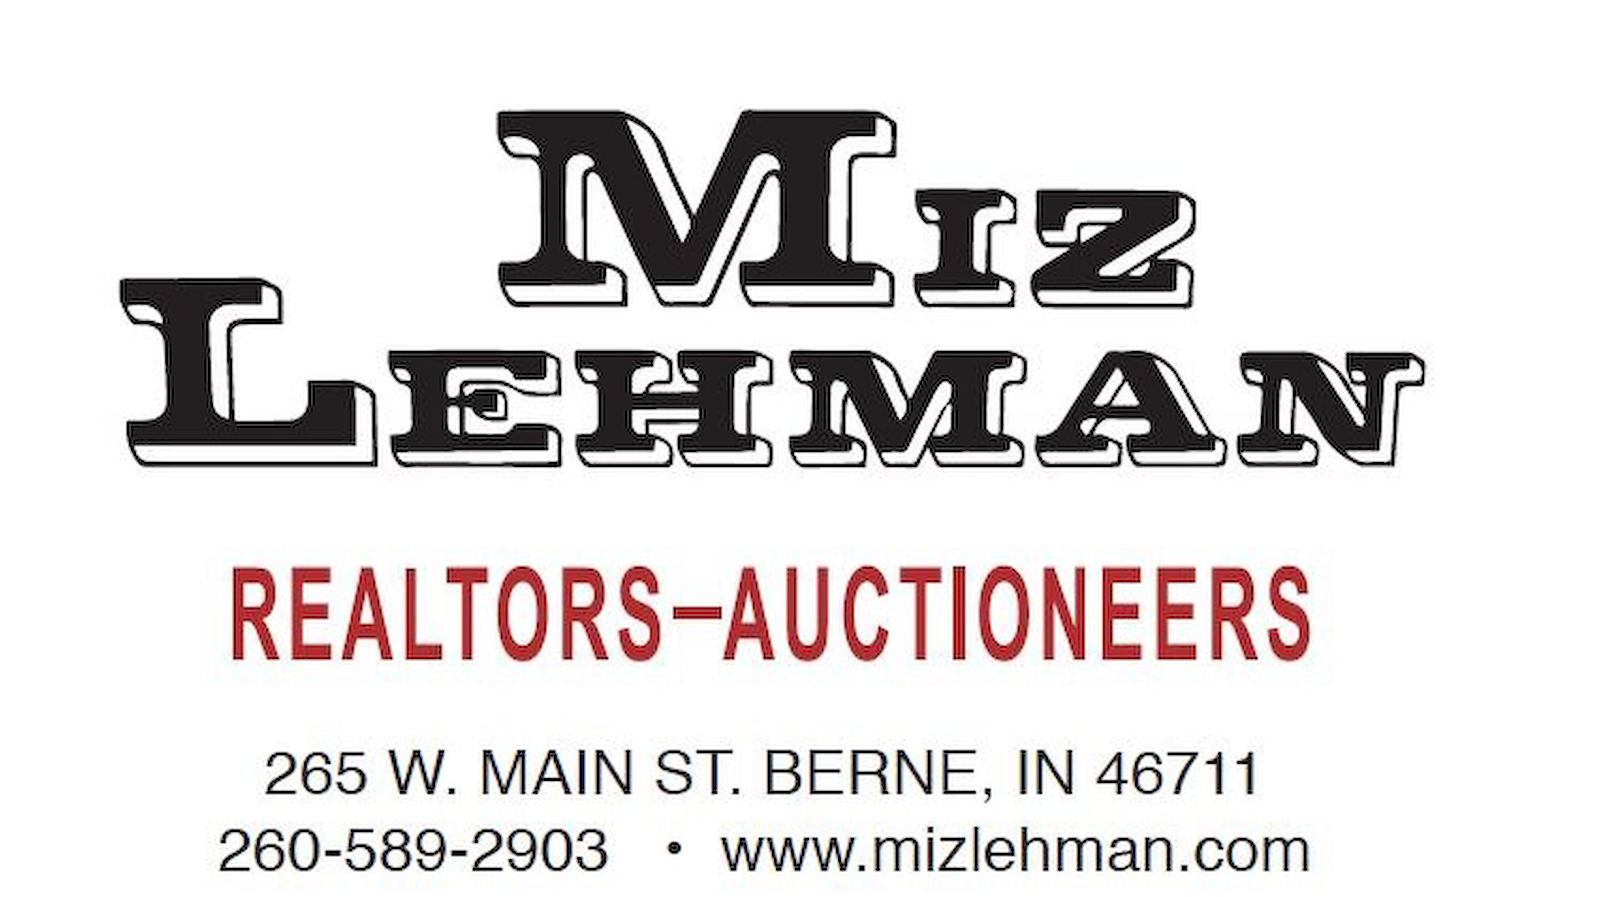 Miz Lehman Realtors-Auctioneers